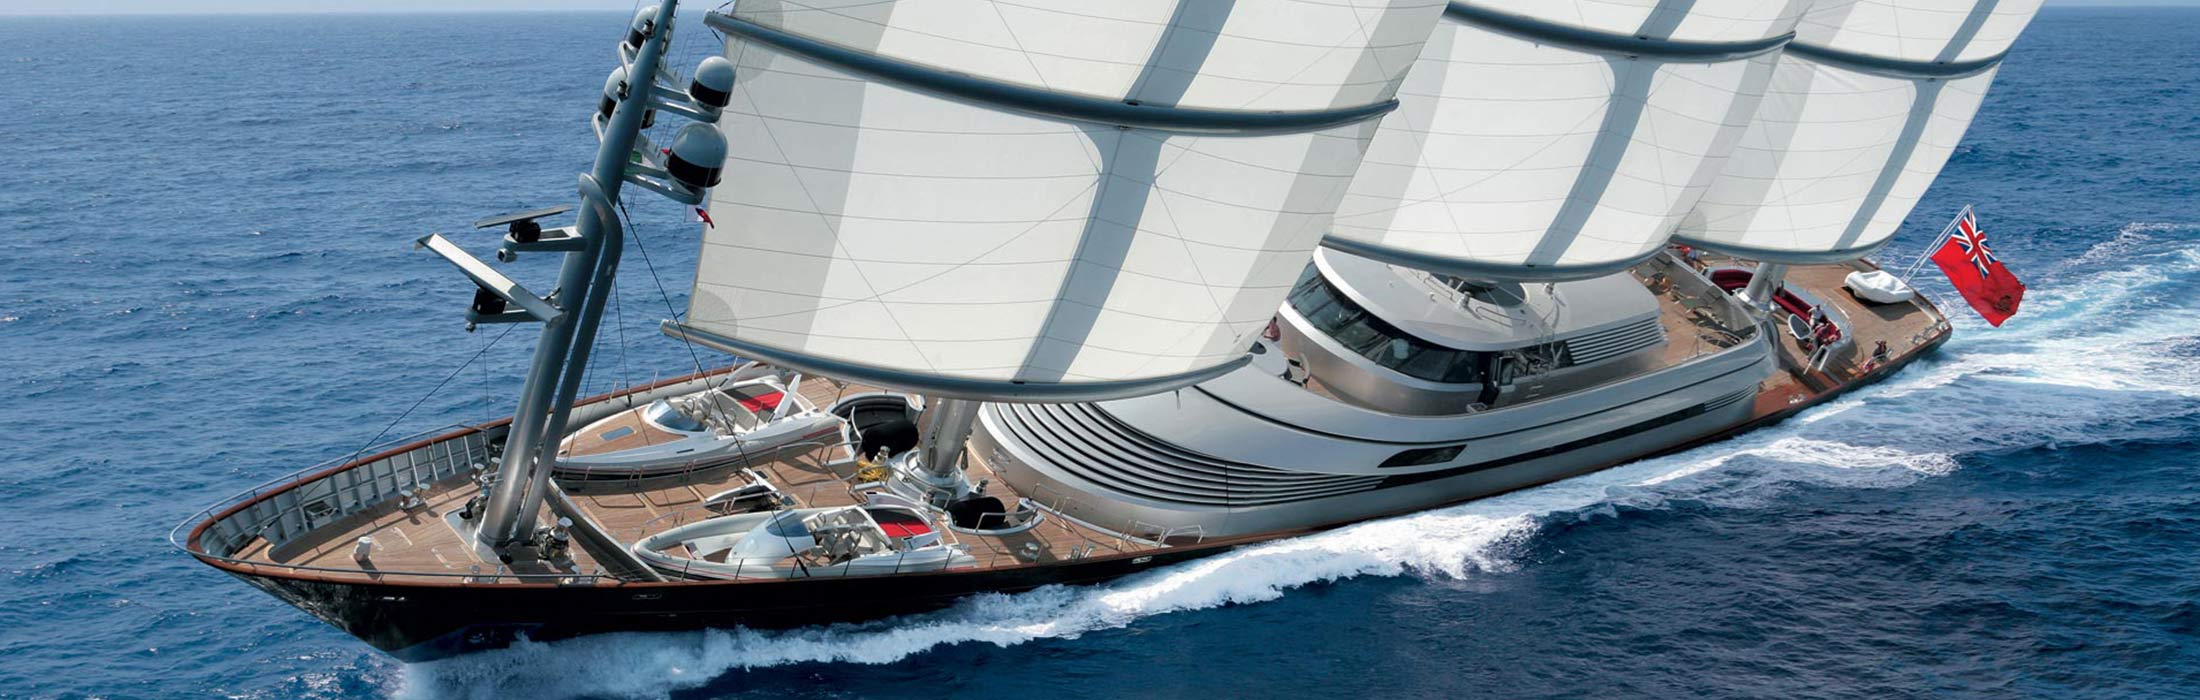 luxury yacht charter destinations carribean bahamas carribean the british virgin islands main slider 1 5